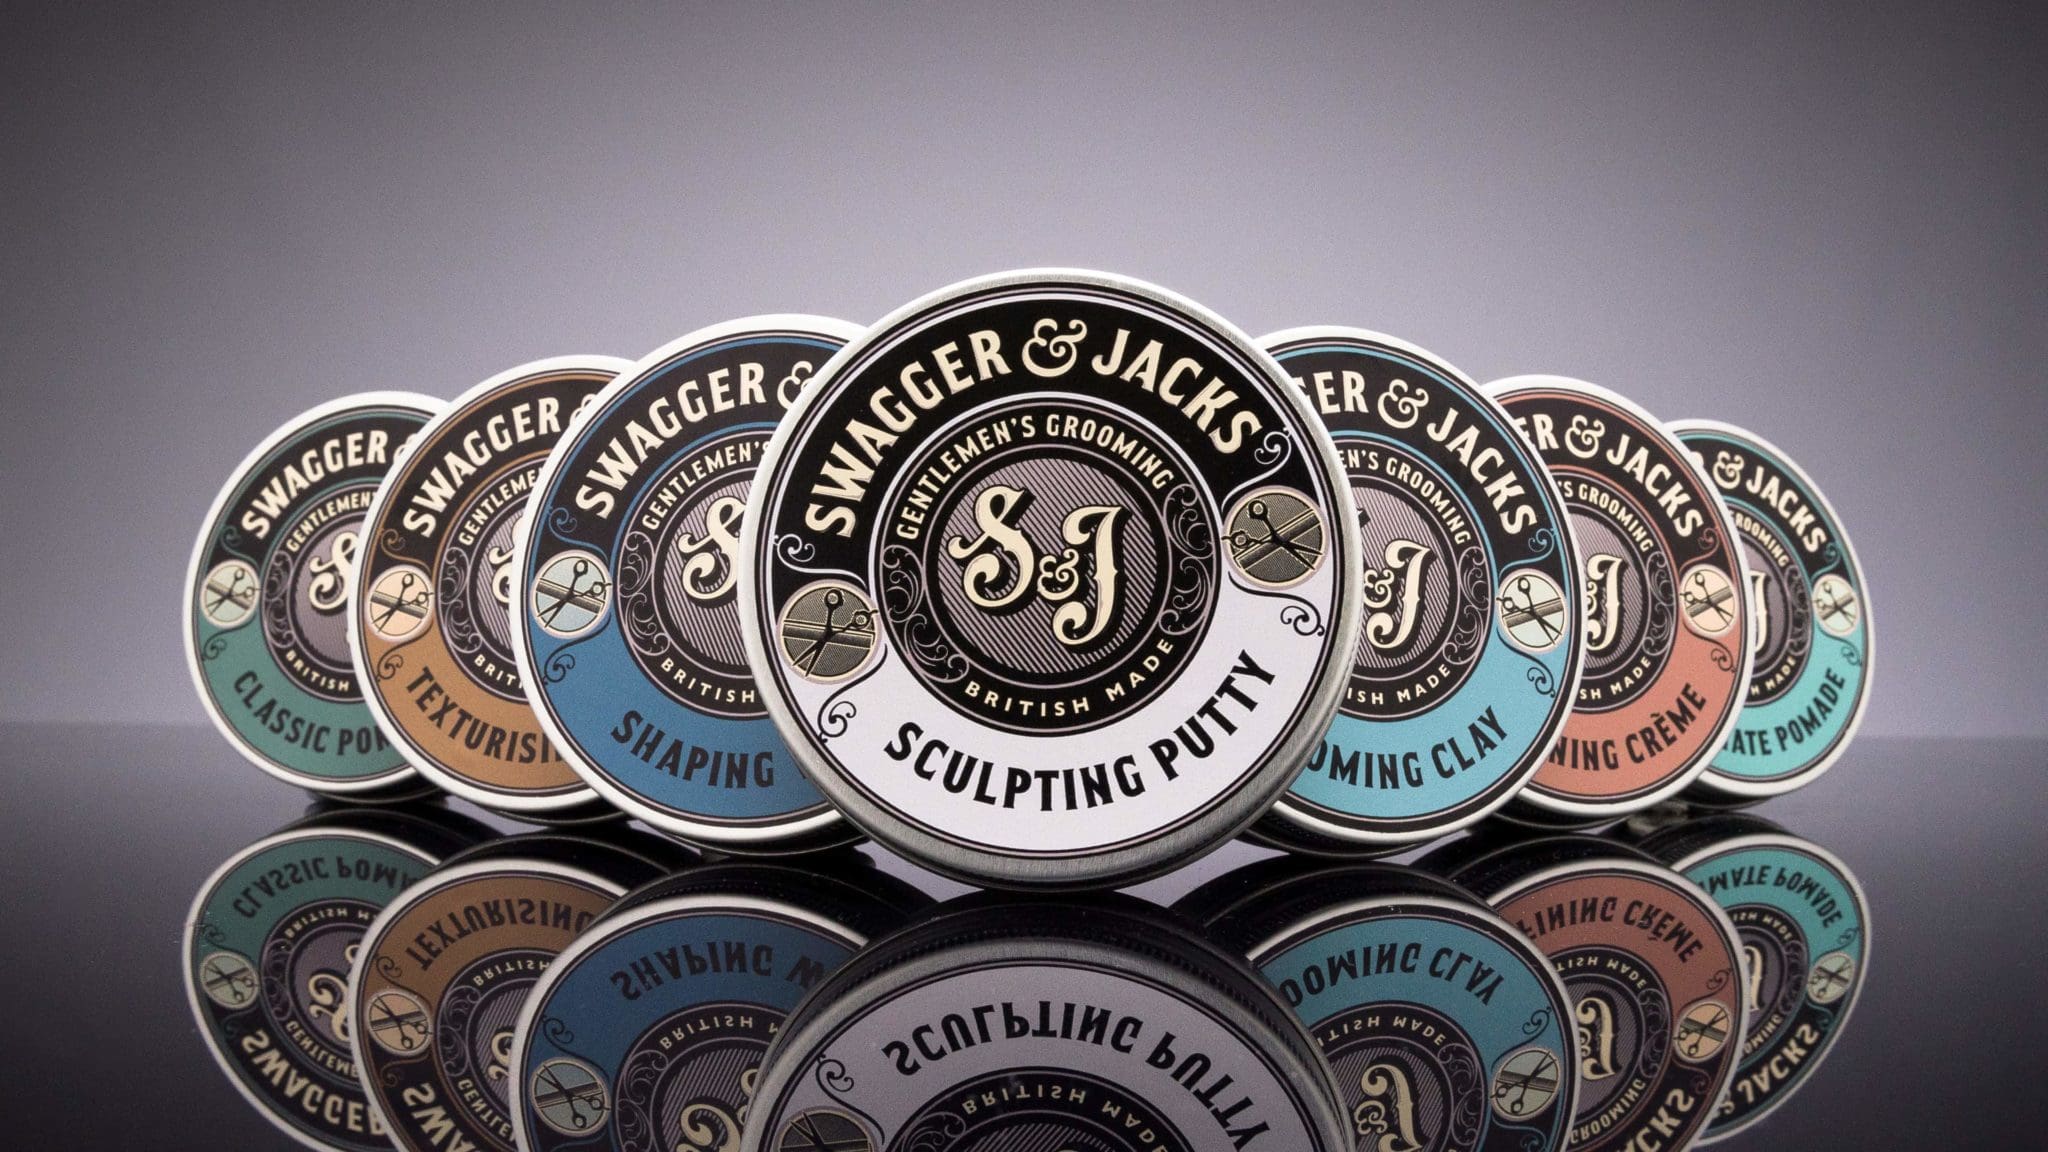 Swagger&Jacks branding & Packaging Design animation by Bluestone98 digital agency london